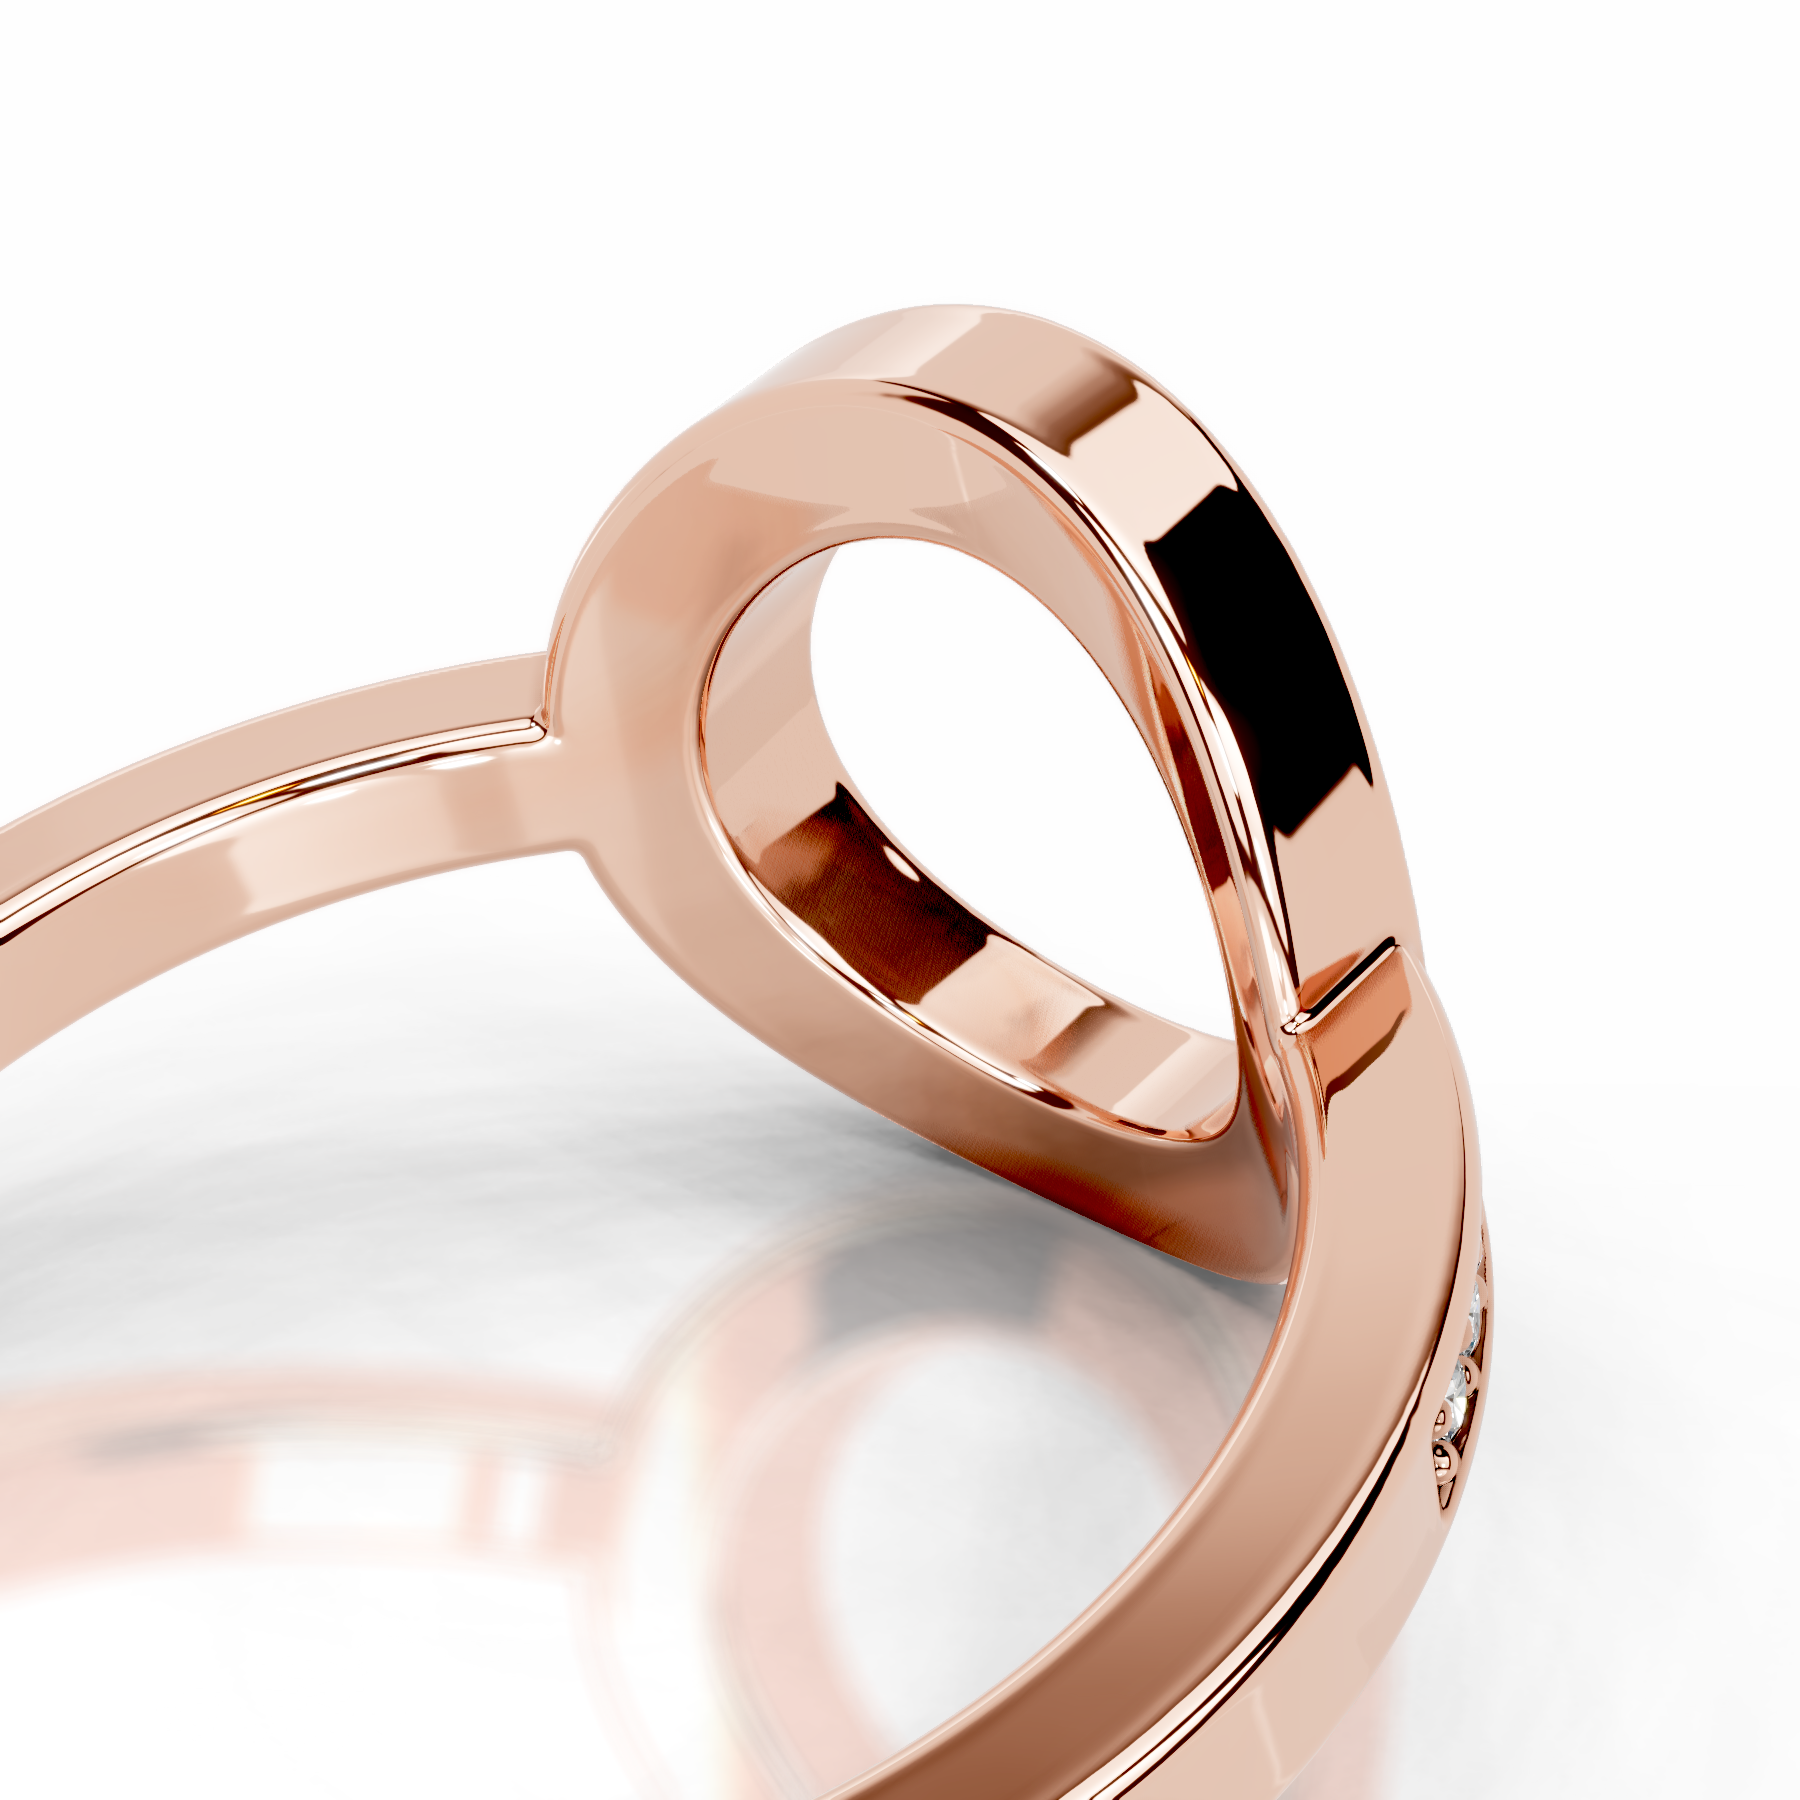 Inessa Diamond Wedding Ring   (0.15 Carat) -14K Rose Gold